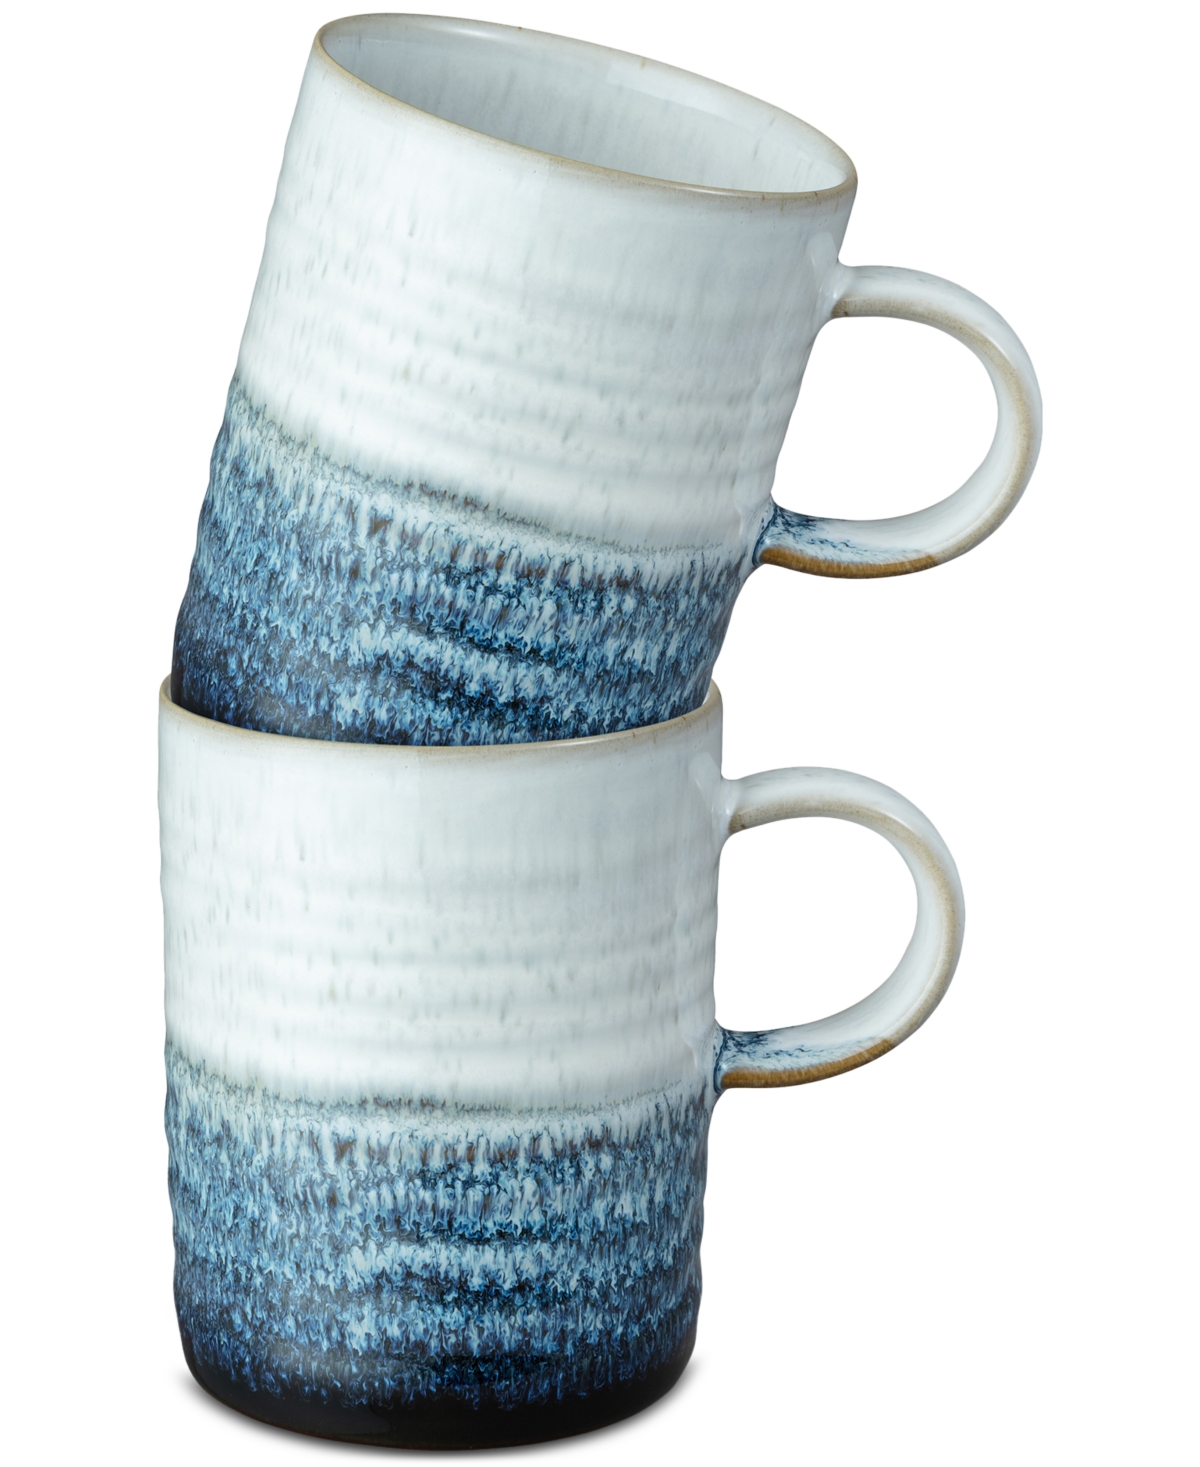 Kiln Collection Ridged Stoneware Mugs, Set of 2 - Blue